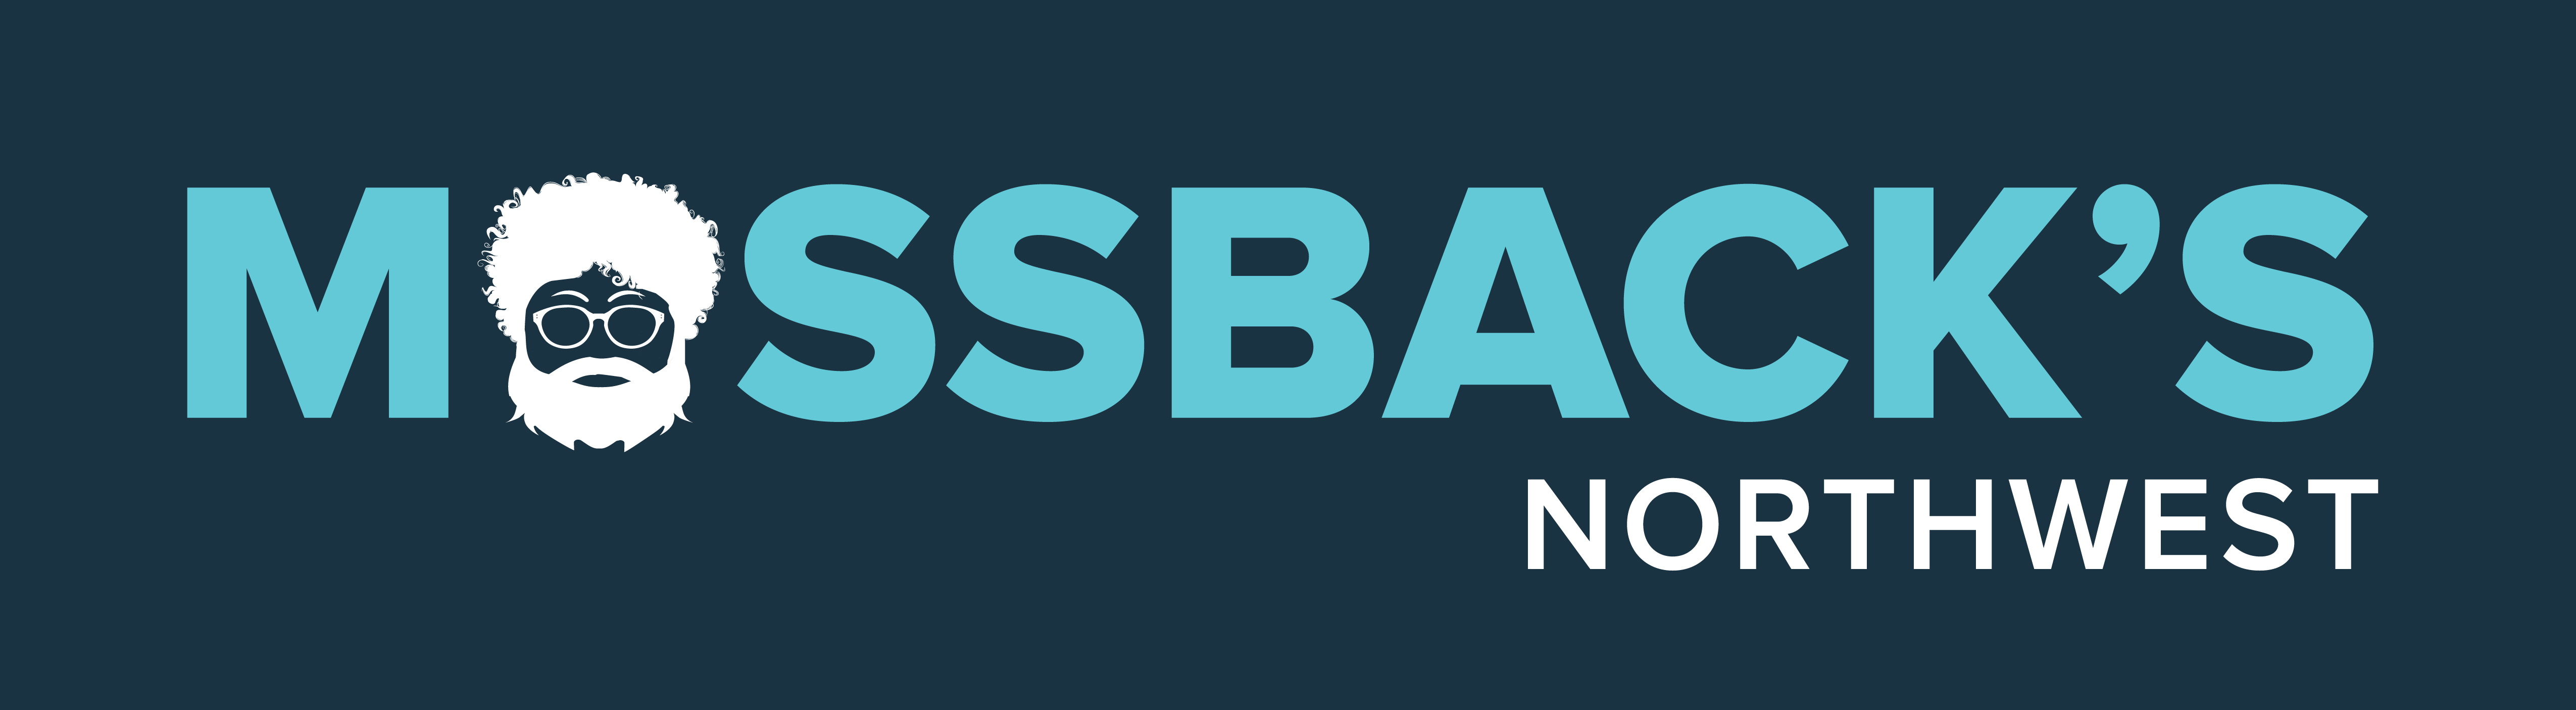 Mossback's Northwest logo